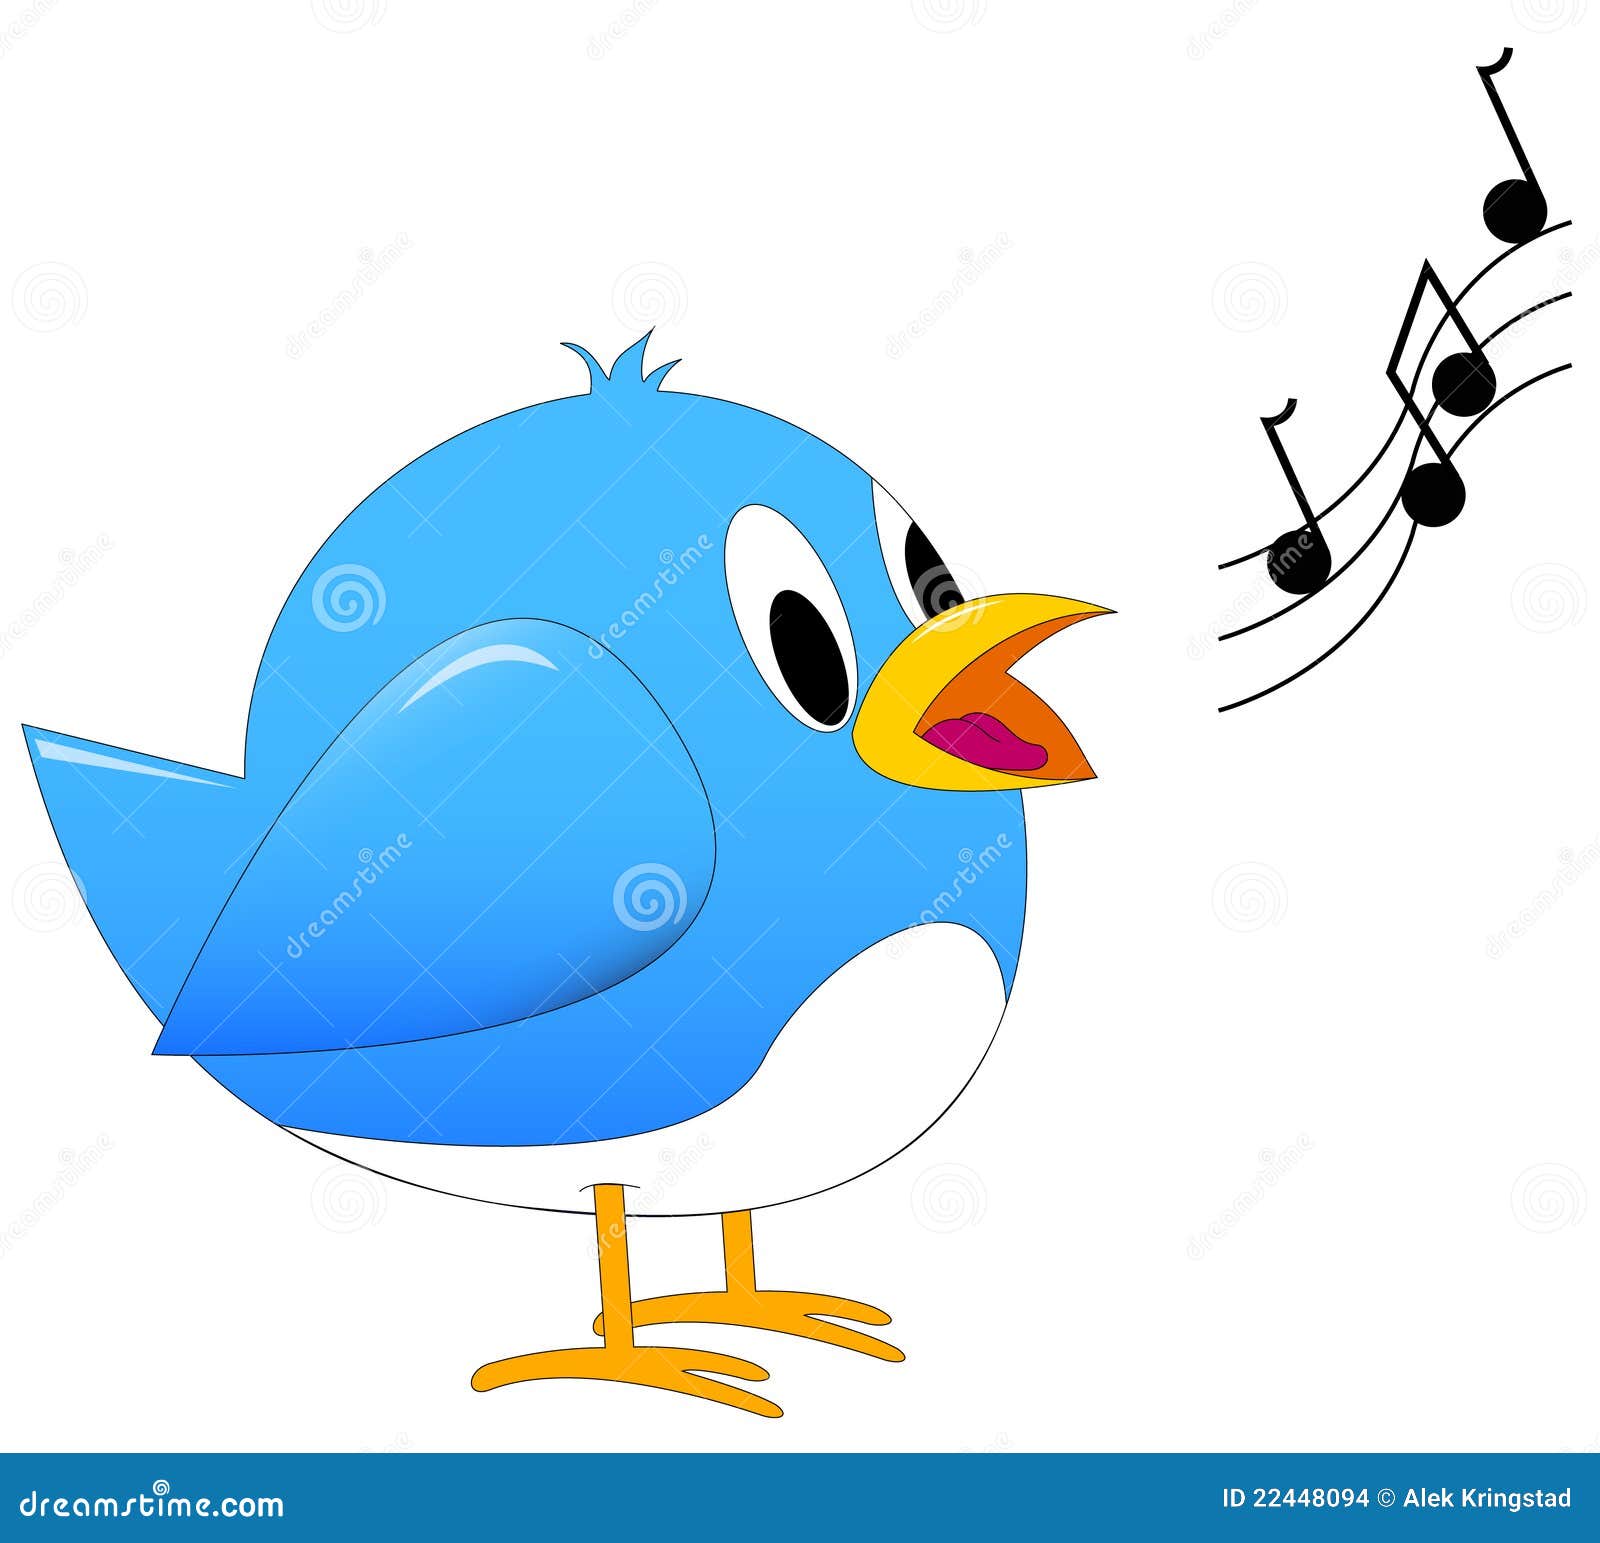 Blue song bird singing stock vector. Illustration of small - 22448094